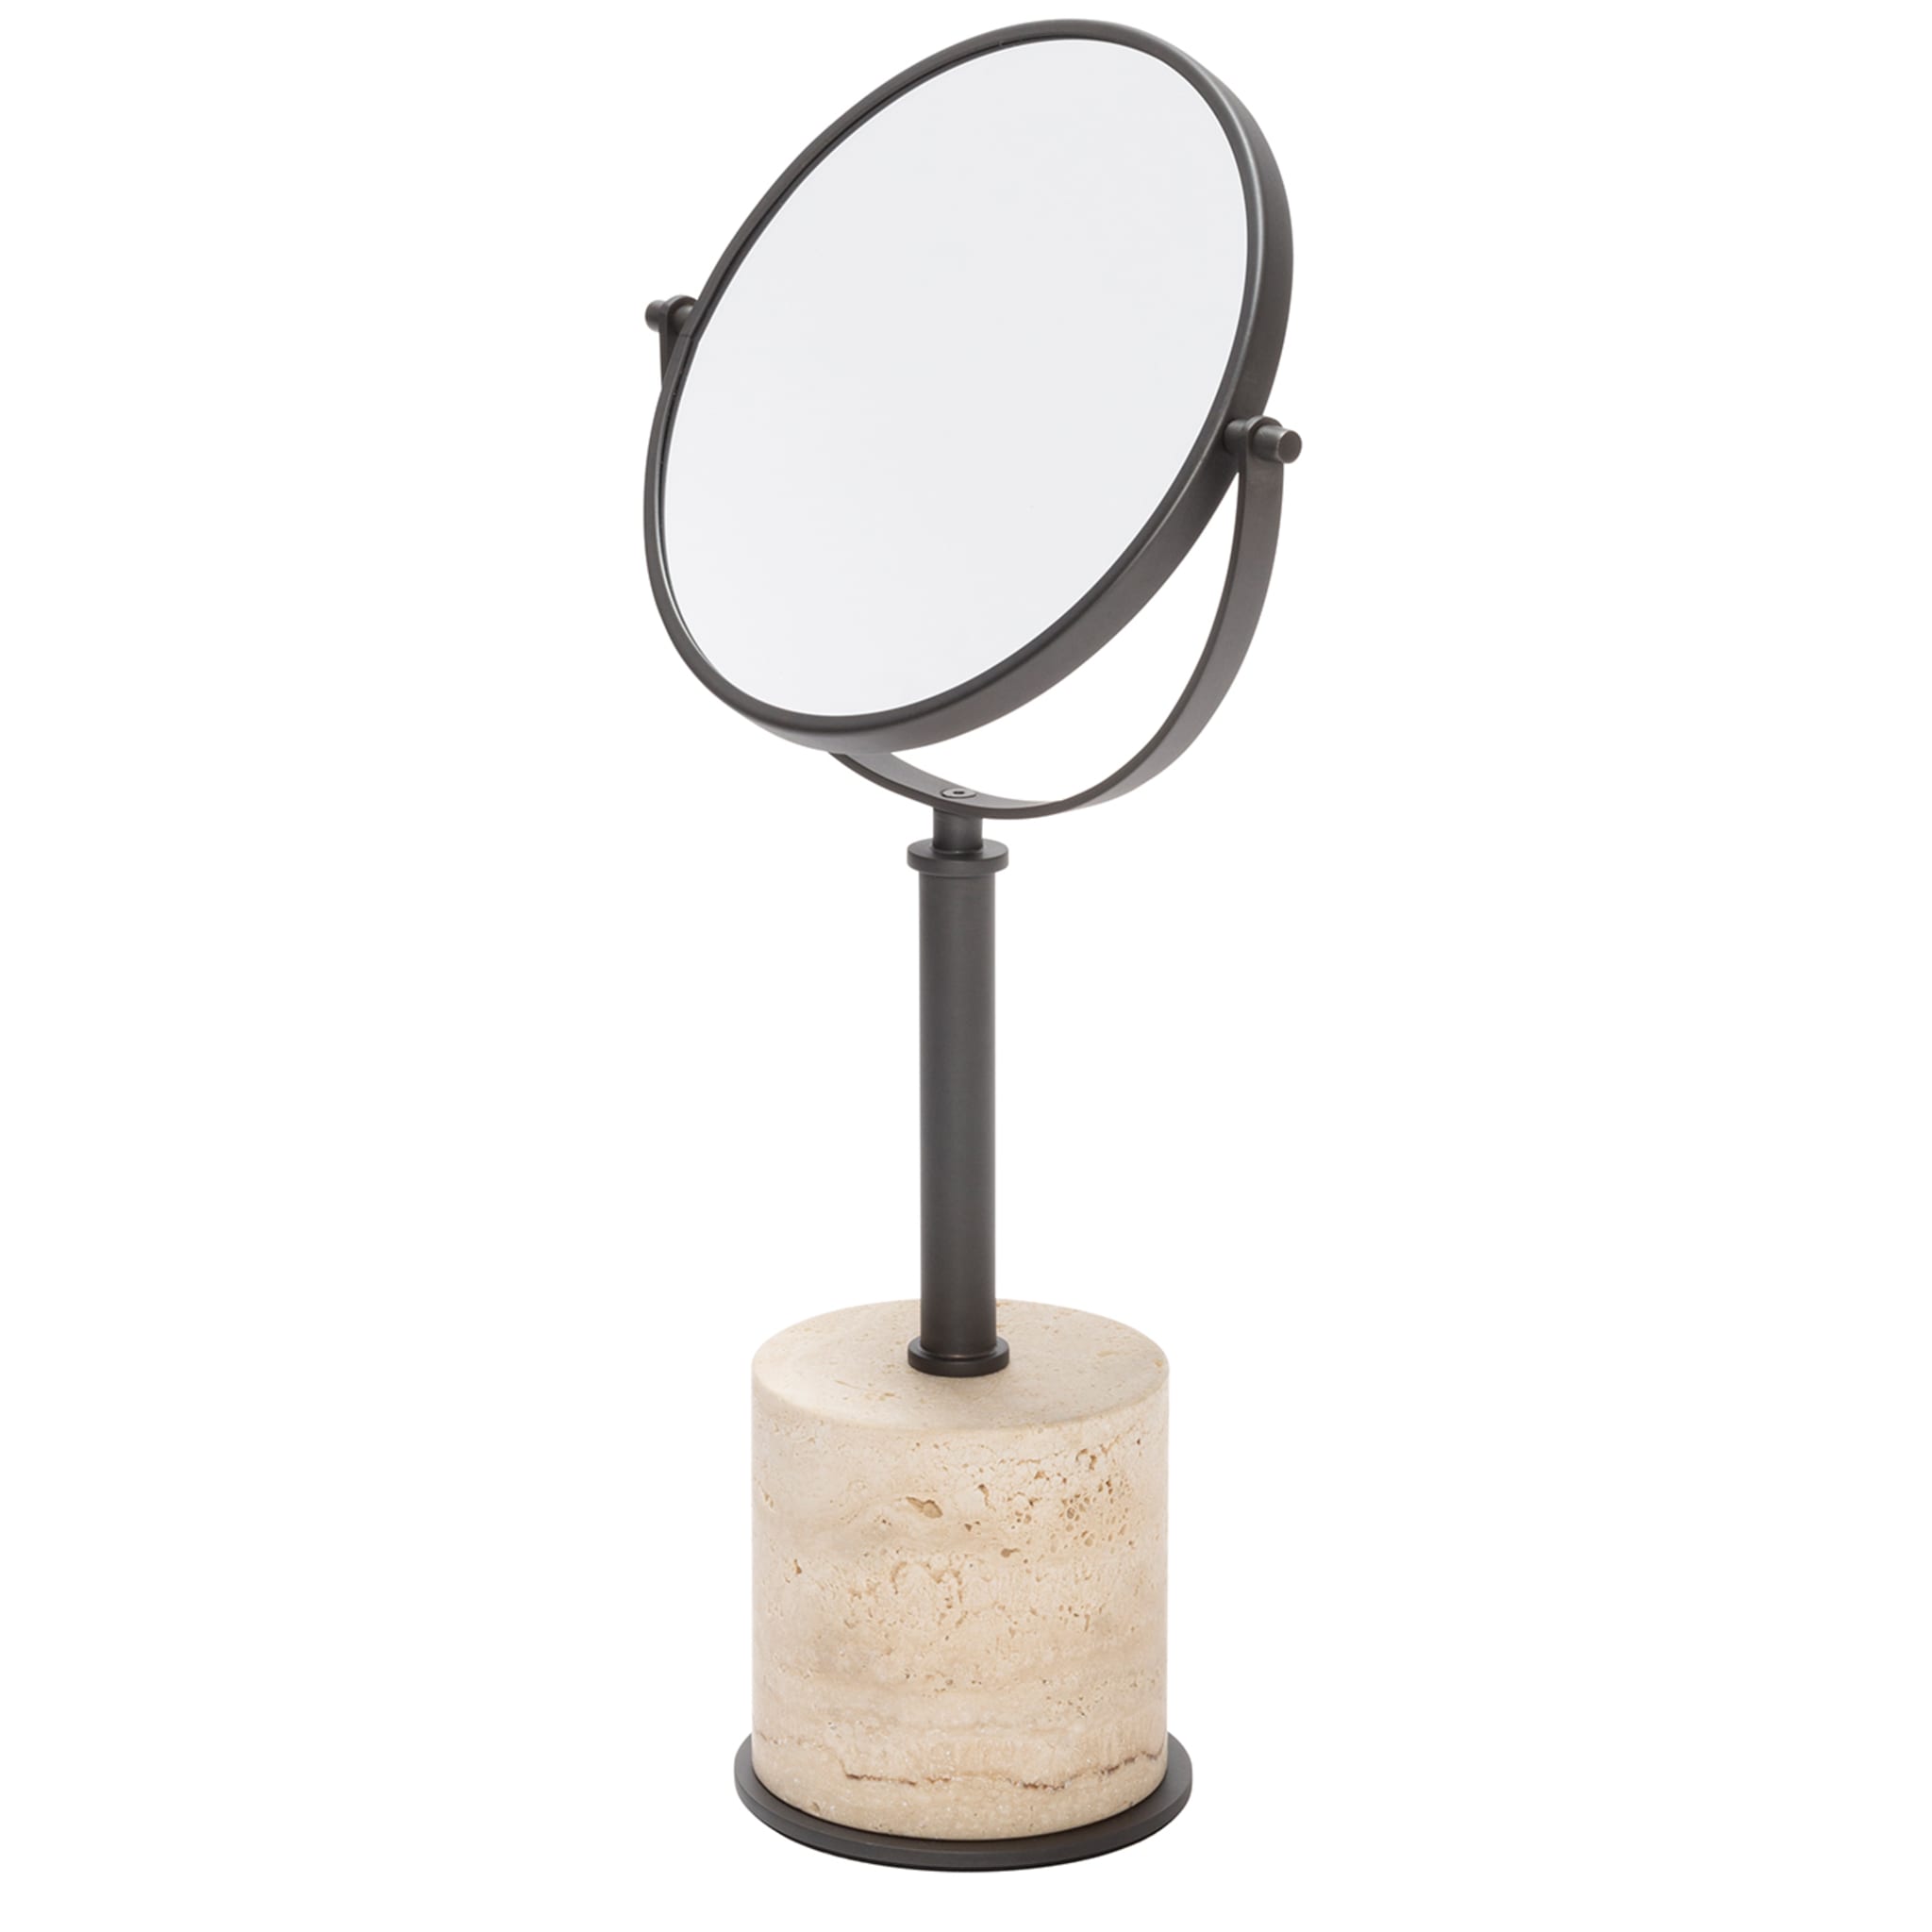 Positano Marble Freestanding Mirror #1 - Alternative view 1